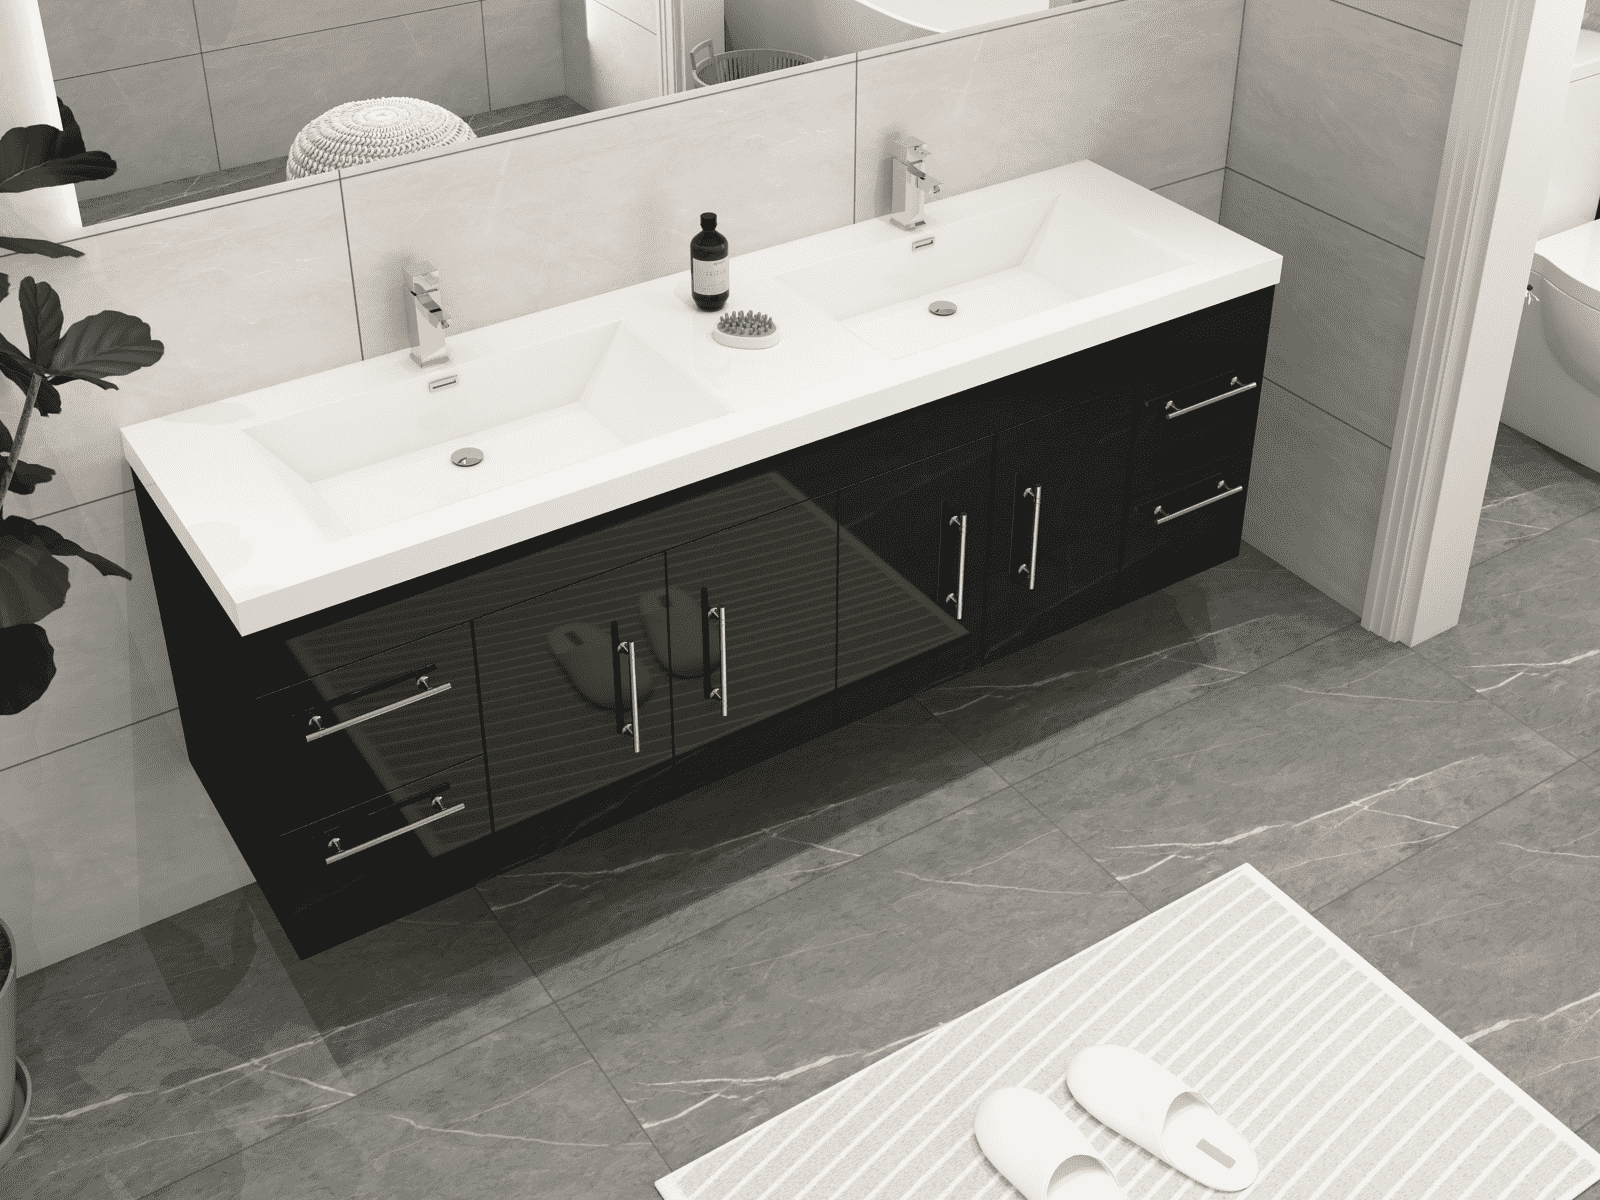 Elsa 72" Wall-Mounted Floating Bathroom Vanity with Reinforced Acrylic Double Sink in Gloss Black | Better Vanity